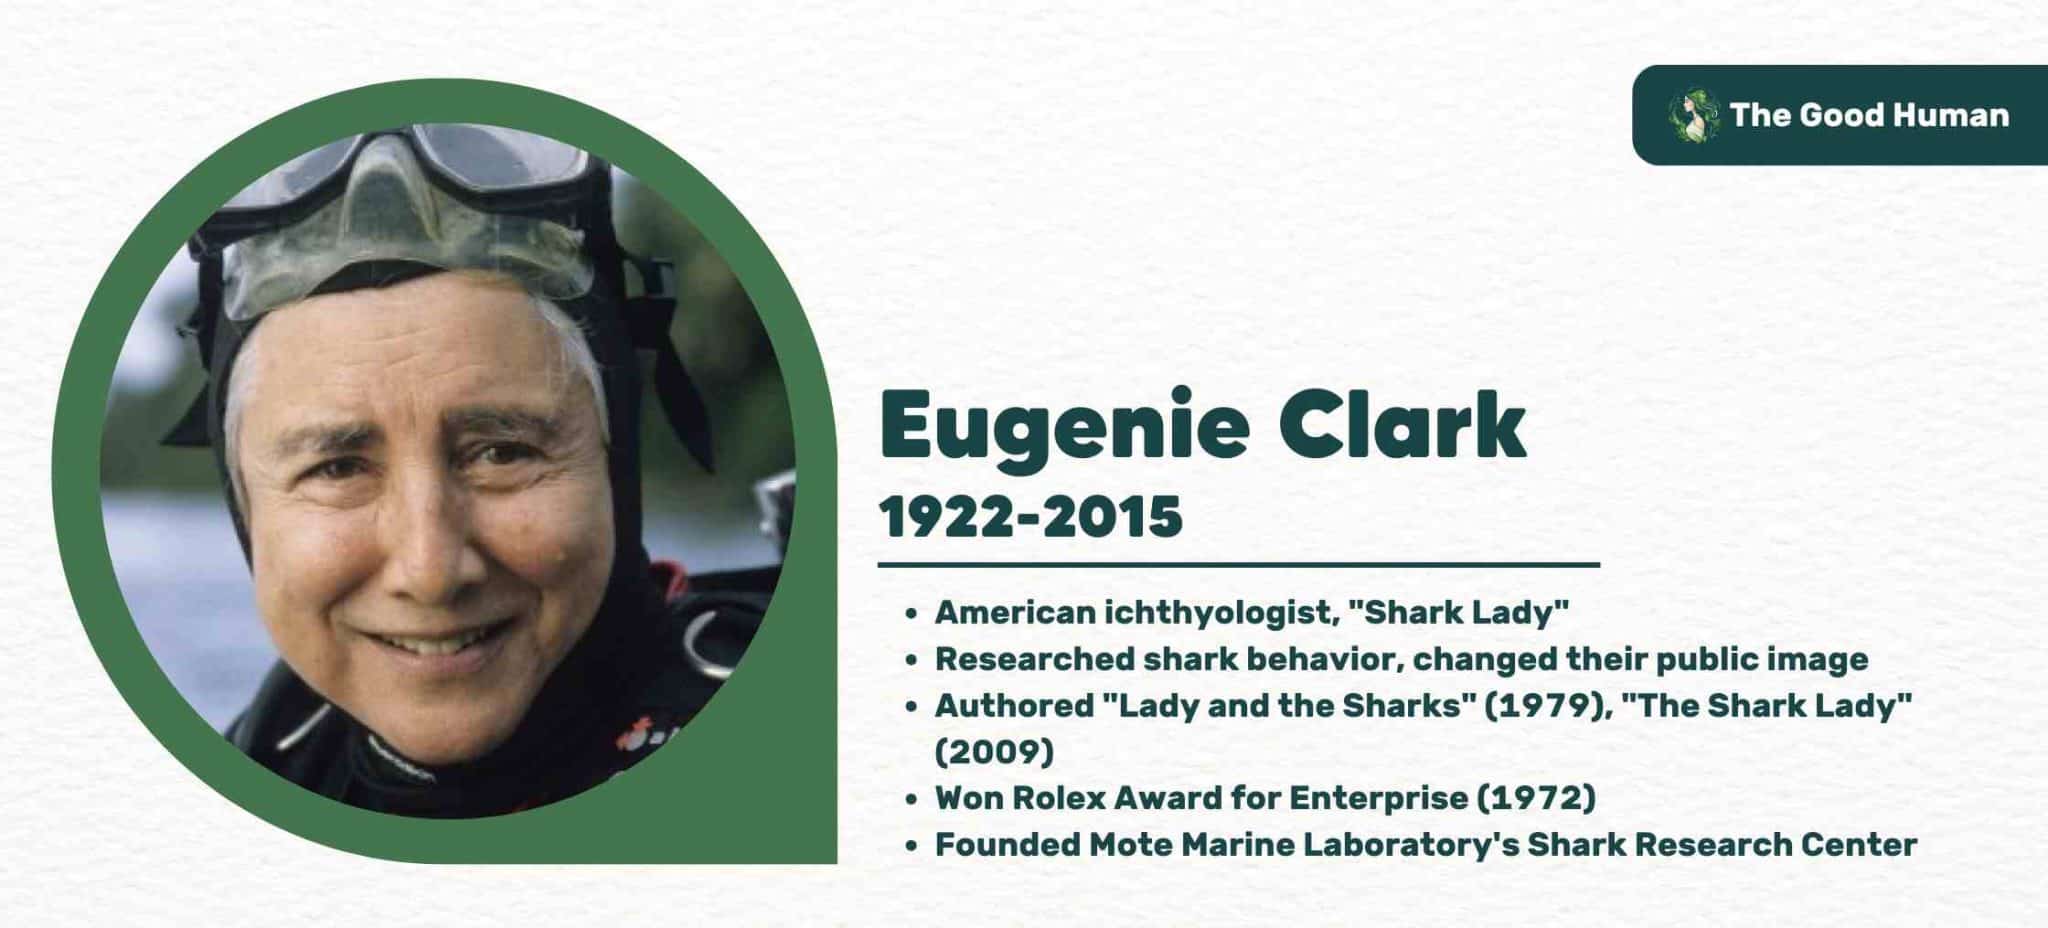 About Eugenie Clark